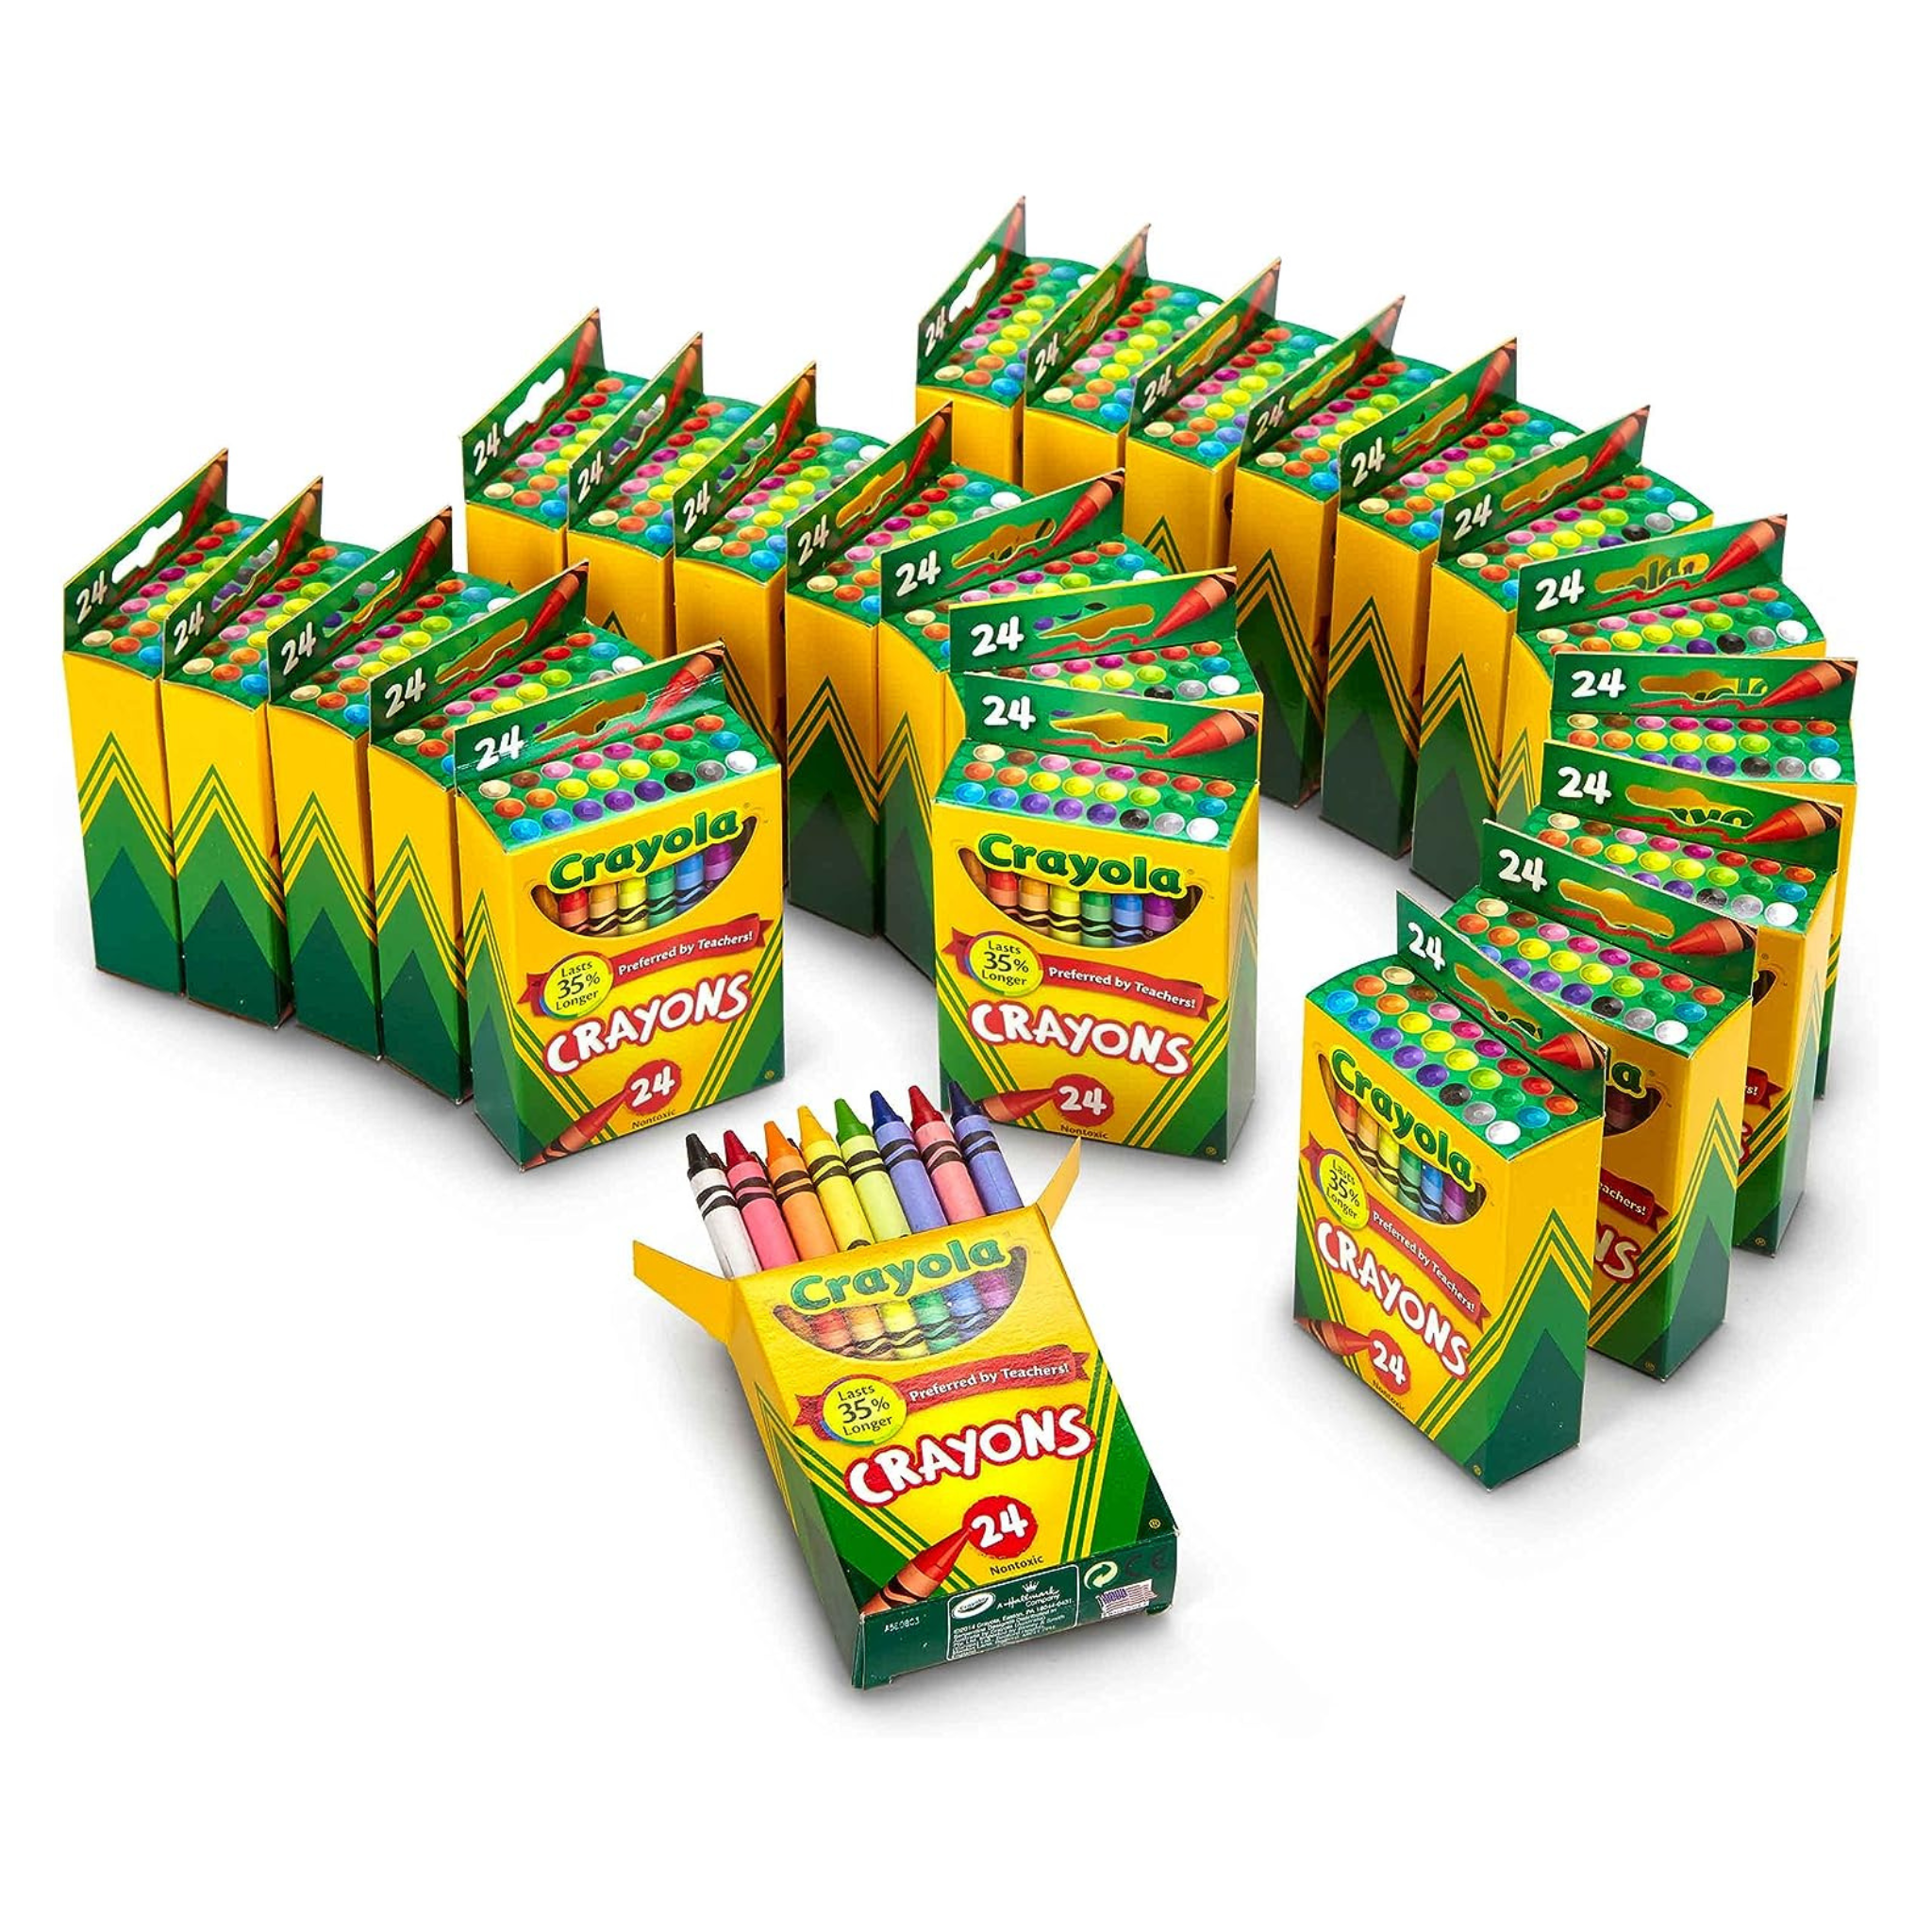 24-Packs Of Crayola Crayons